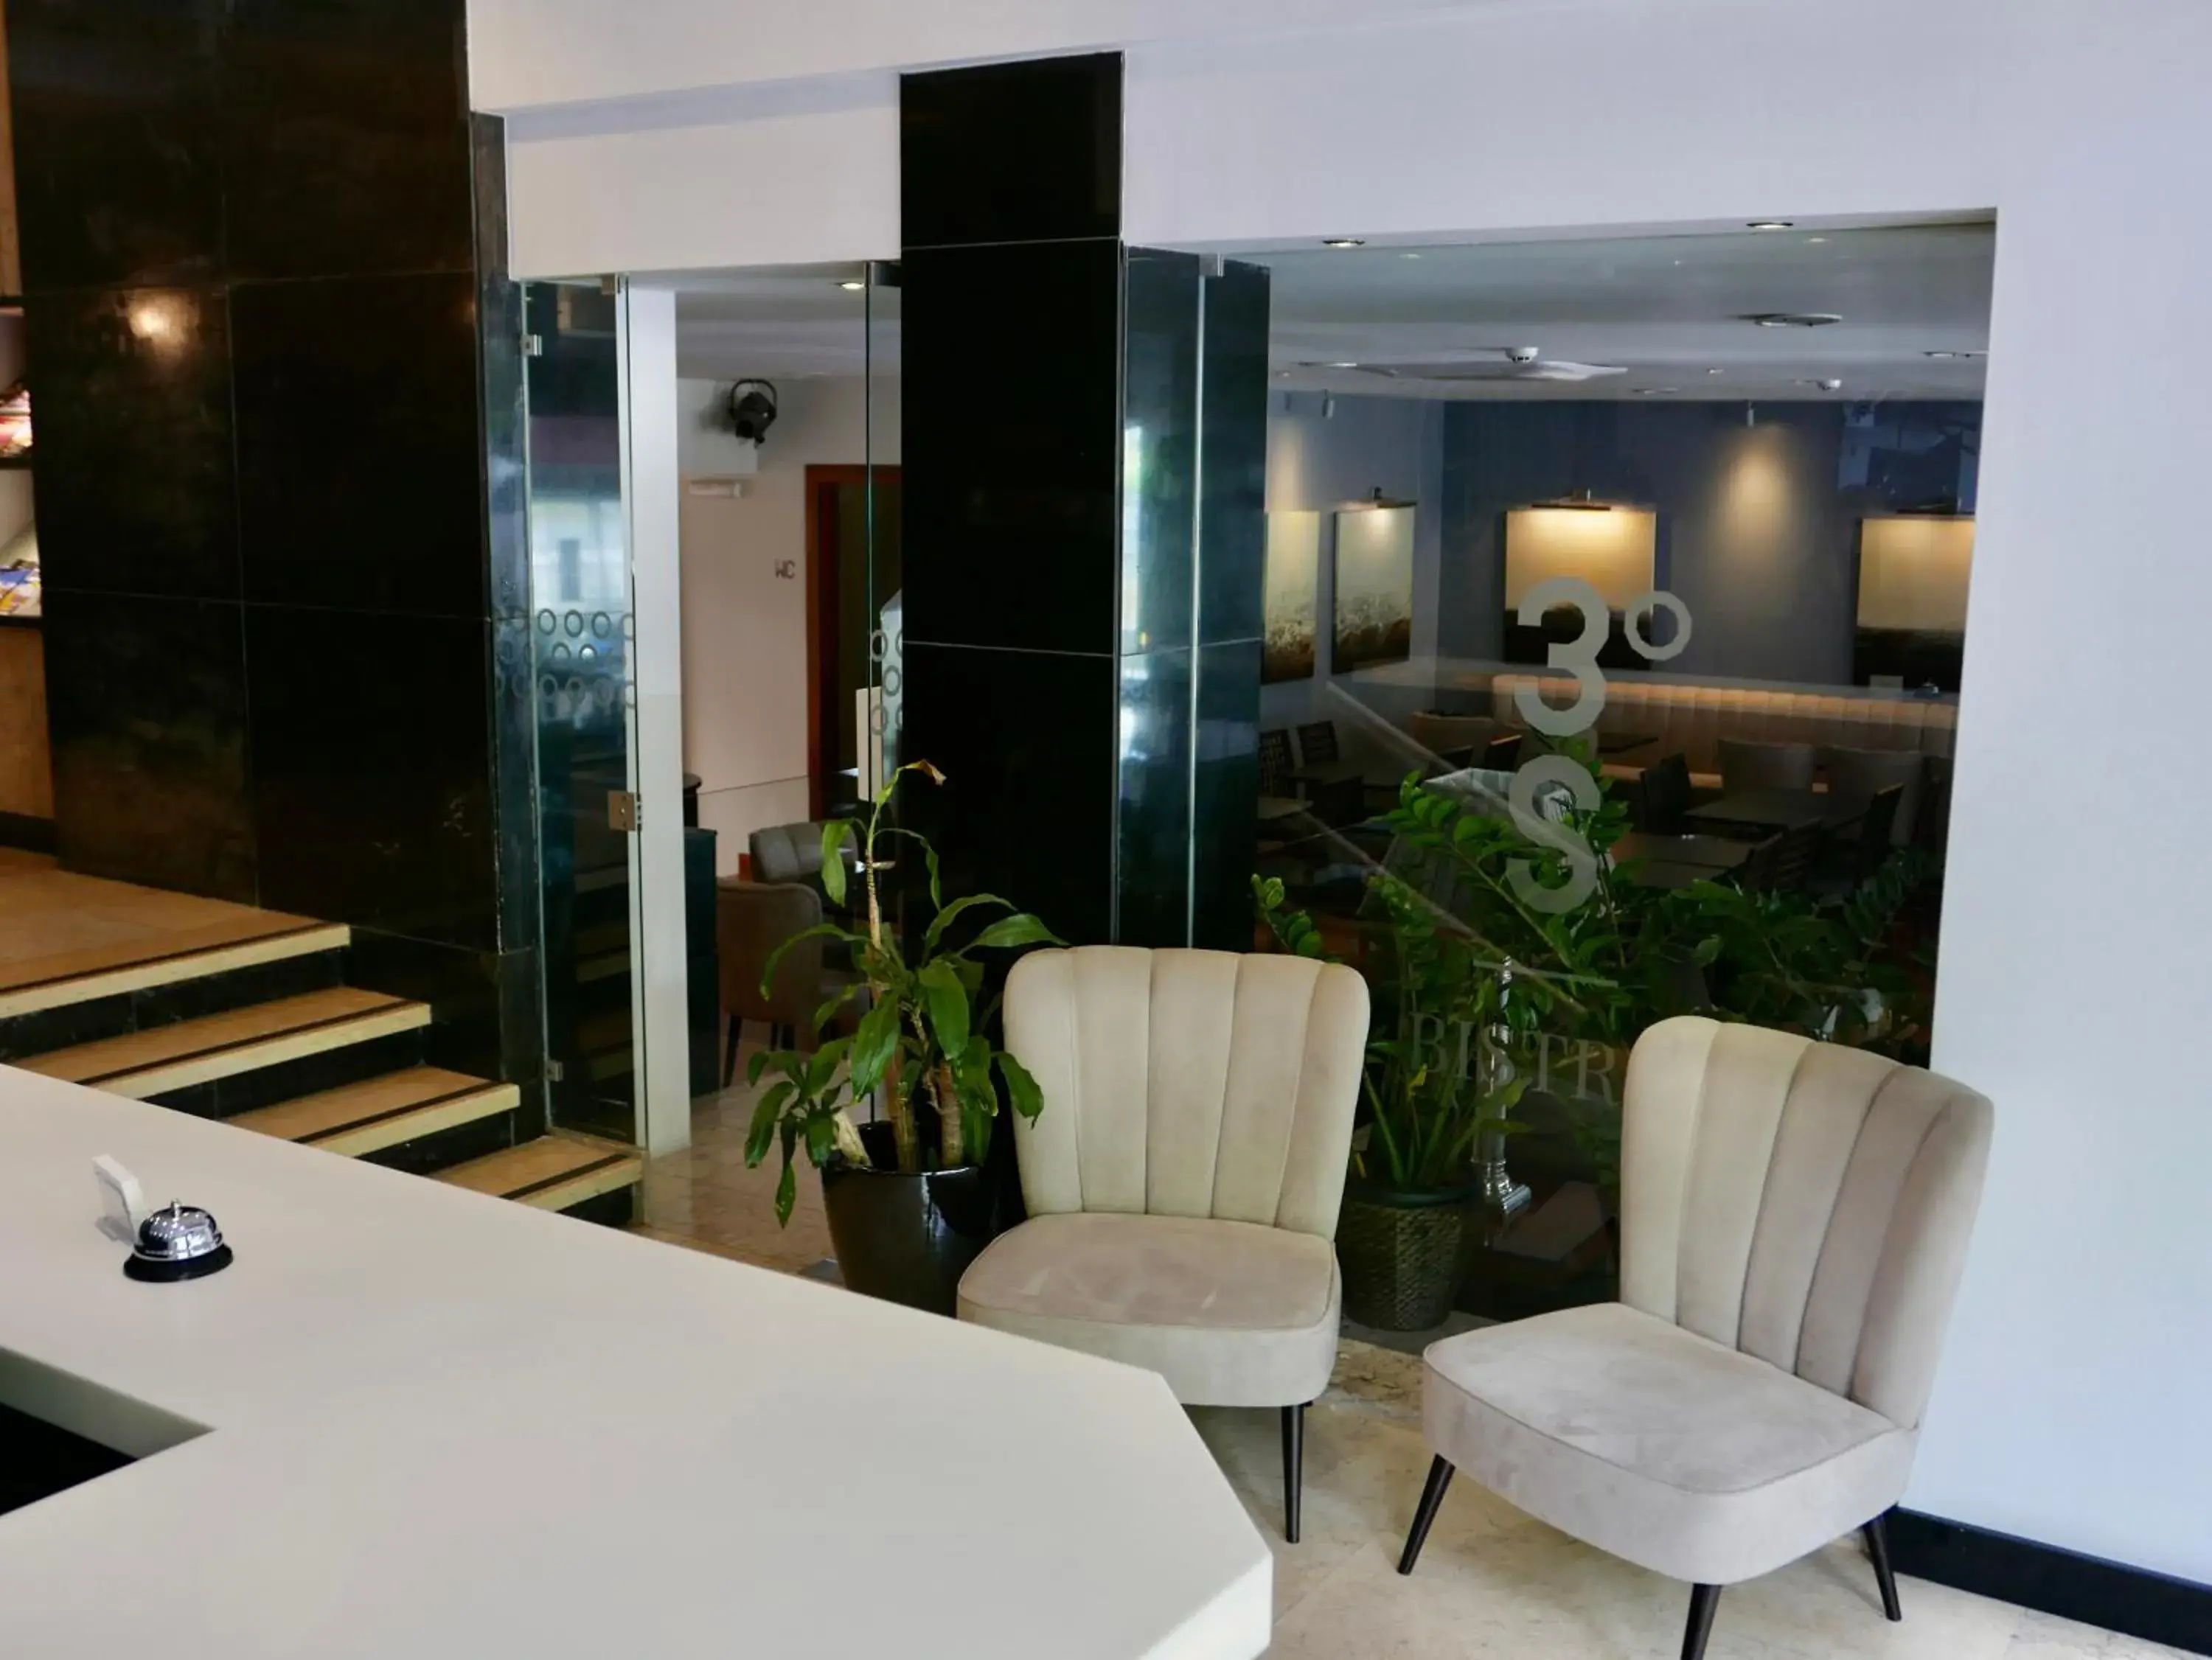 Lobby or reception in Lisboa Central Park Hotel Suites & Studios